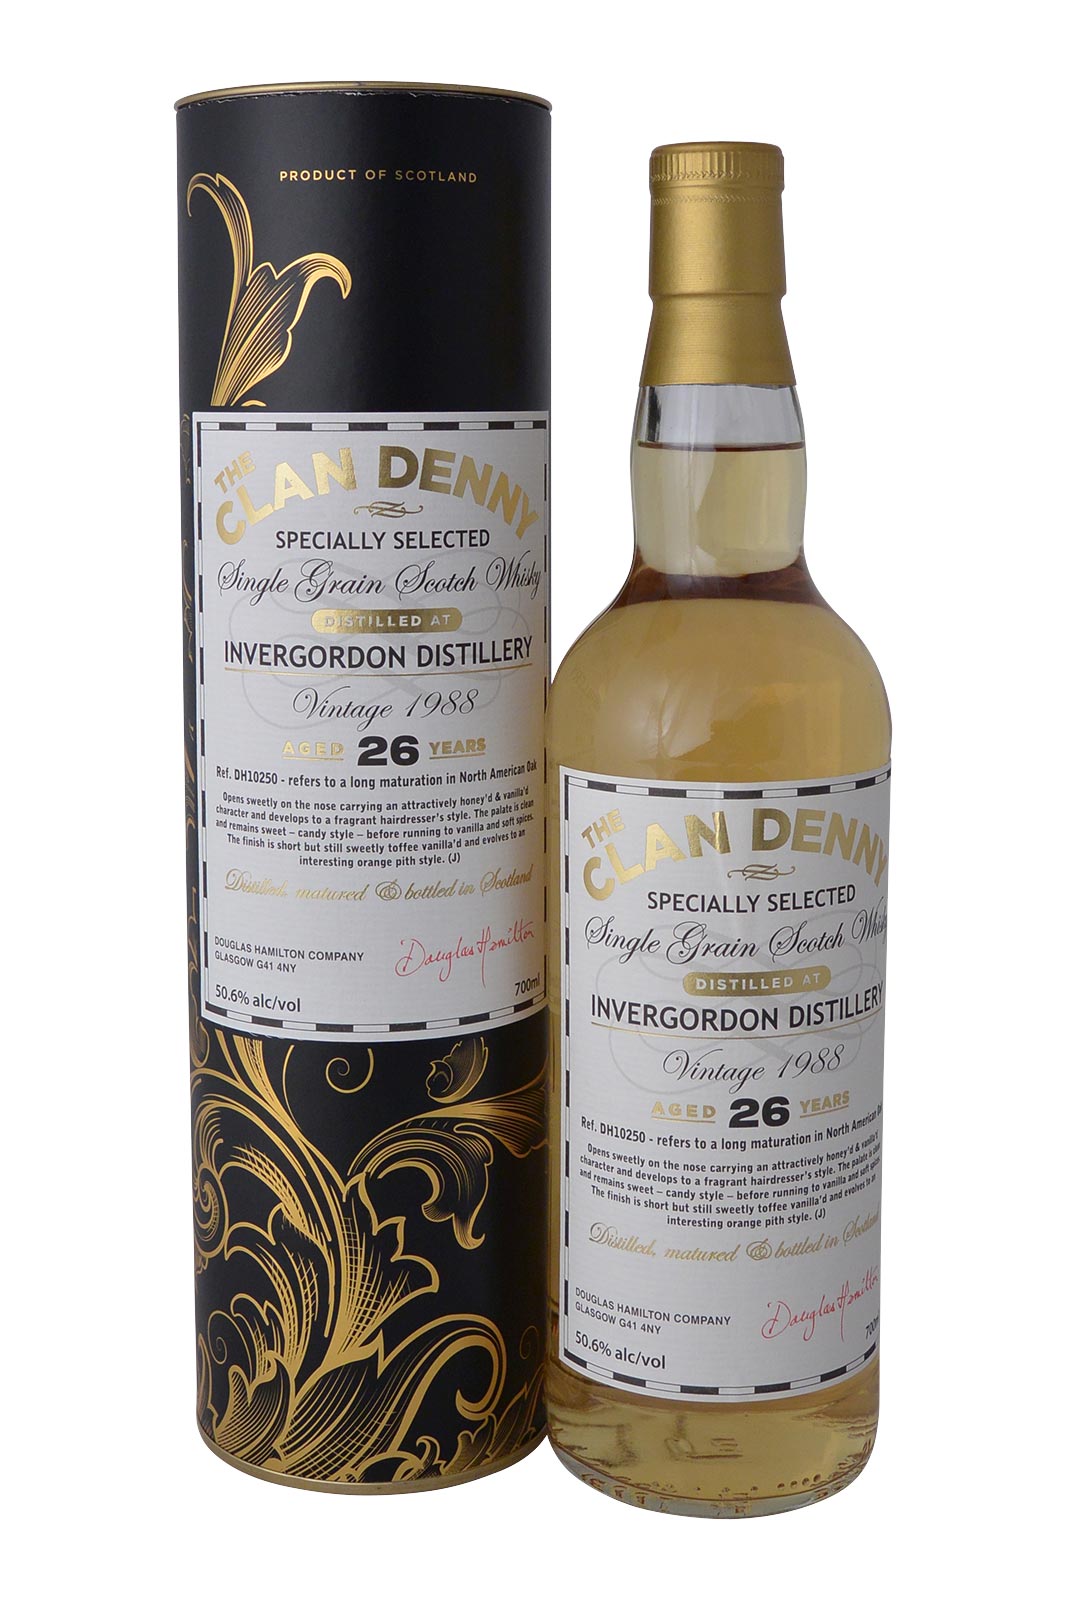 Clan Denny Invergordon Distillery 26 Year Old